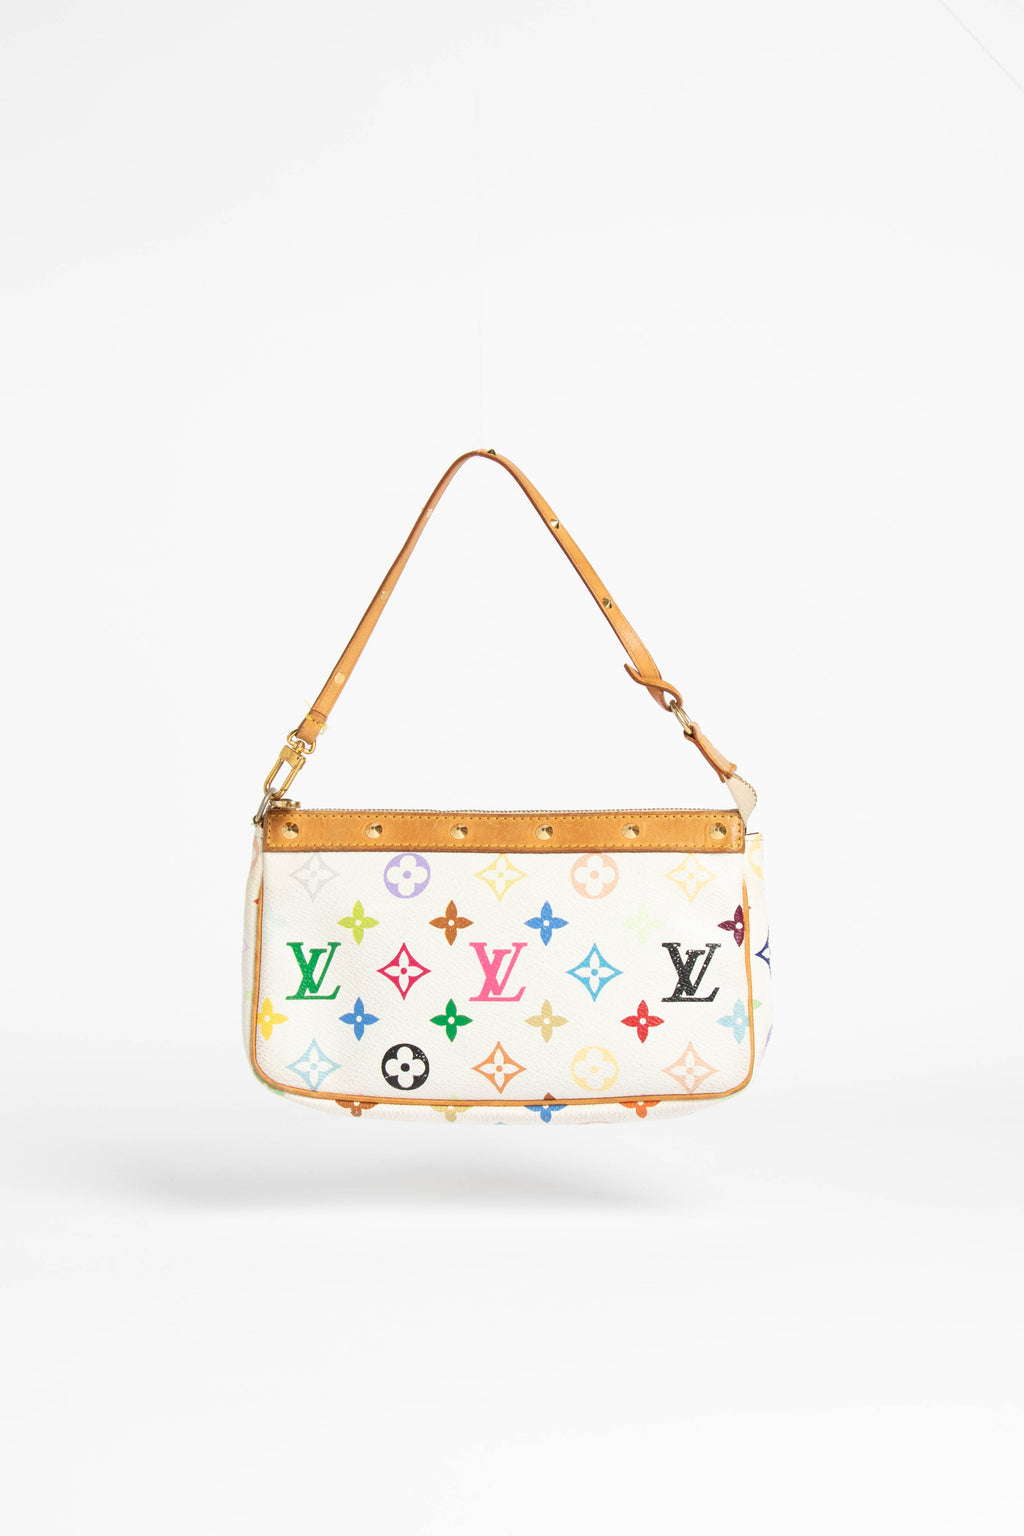 Louis Vuitton Handbags Archives - Handbagholic